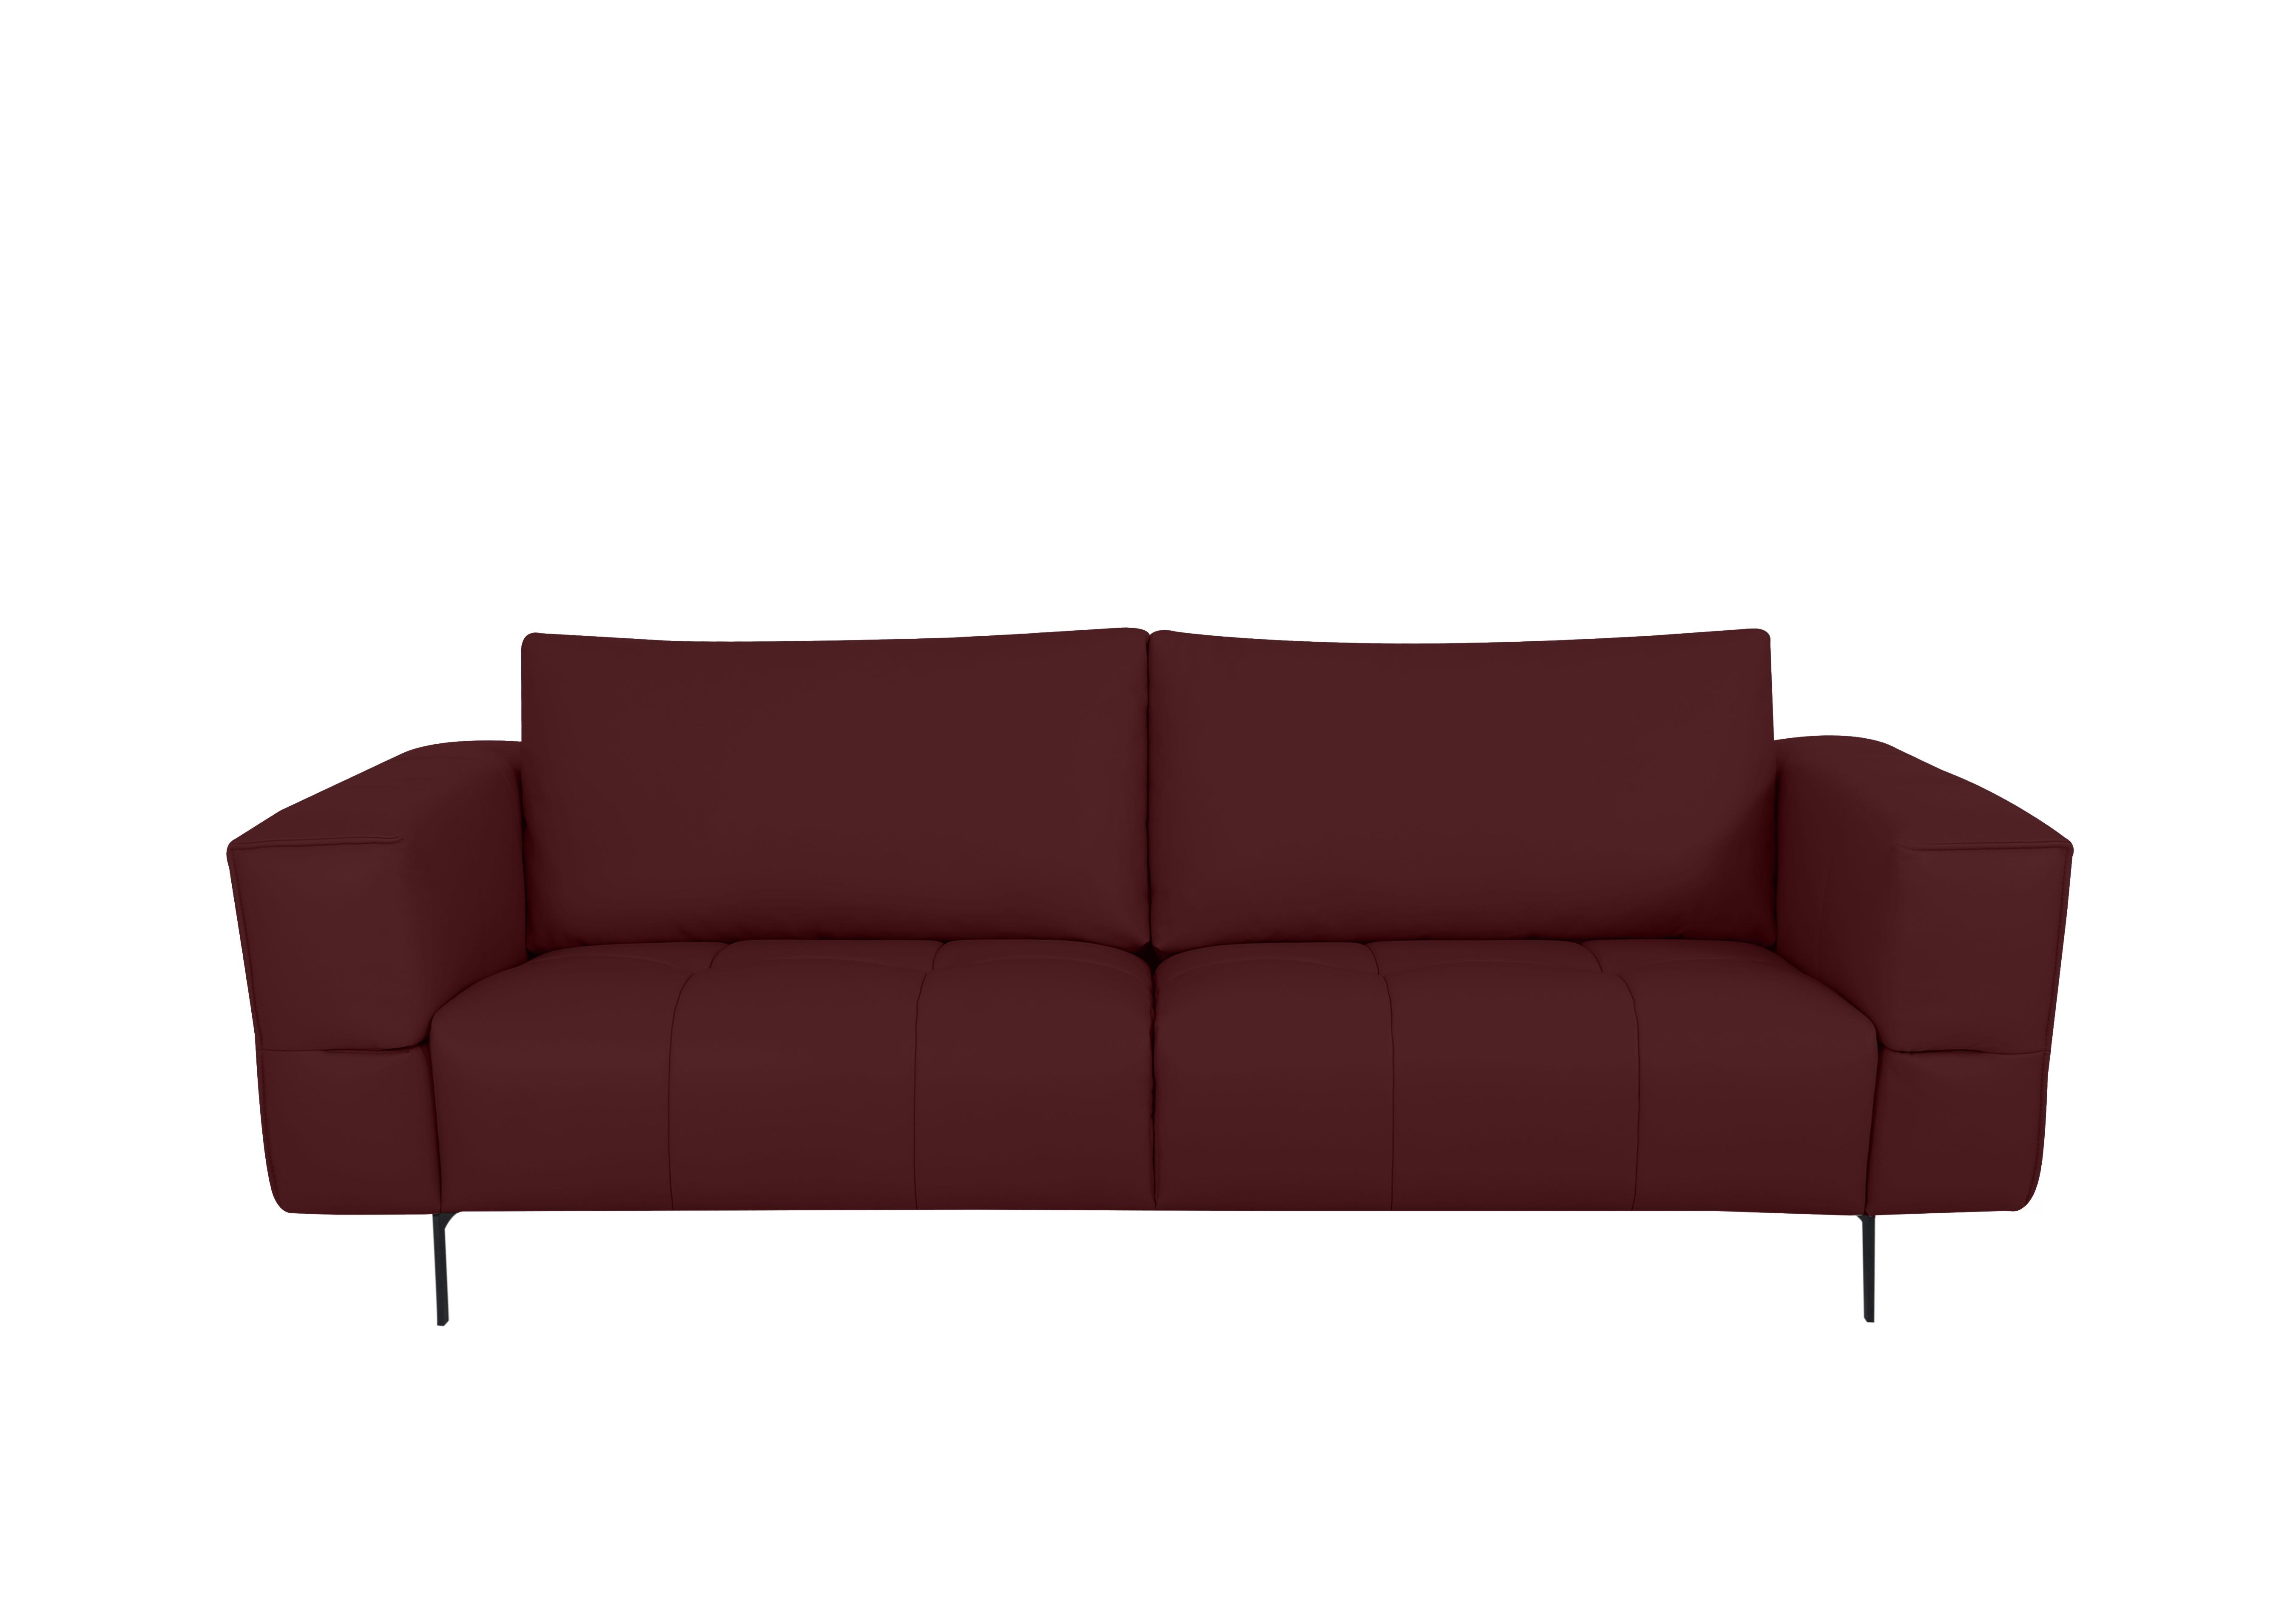 Lawson 3 Seater Leather Sofa in Nn-569e Burgundy on Furniture Village